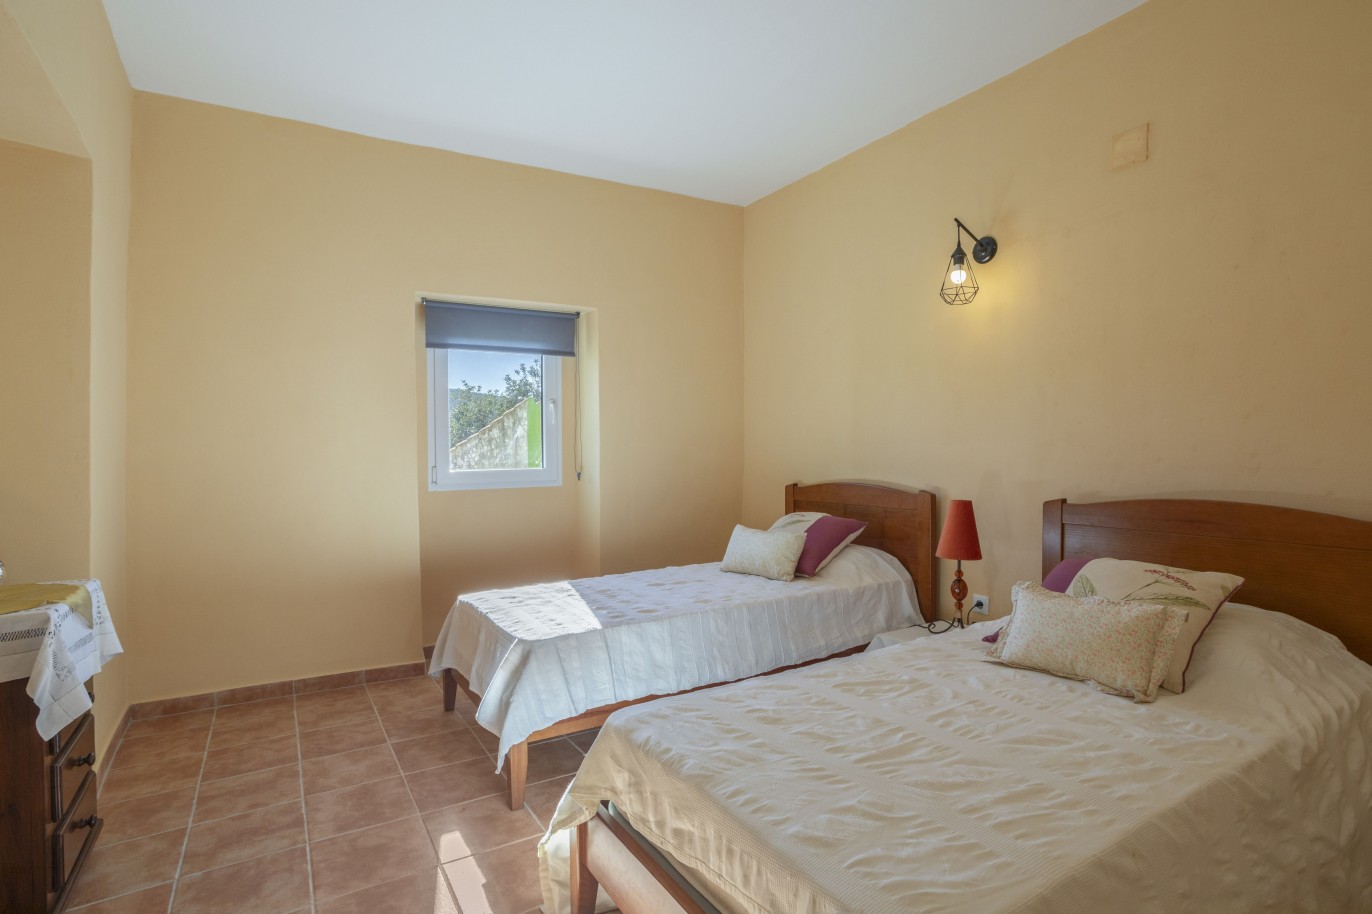 Fantastic 7 bedroom villa with pool, for sale in Alte, Algarve_250660